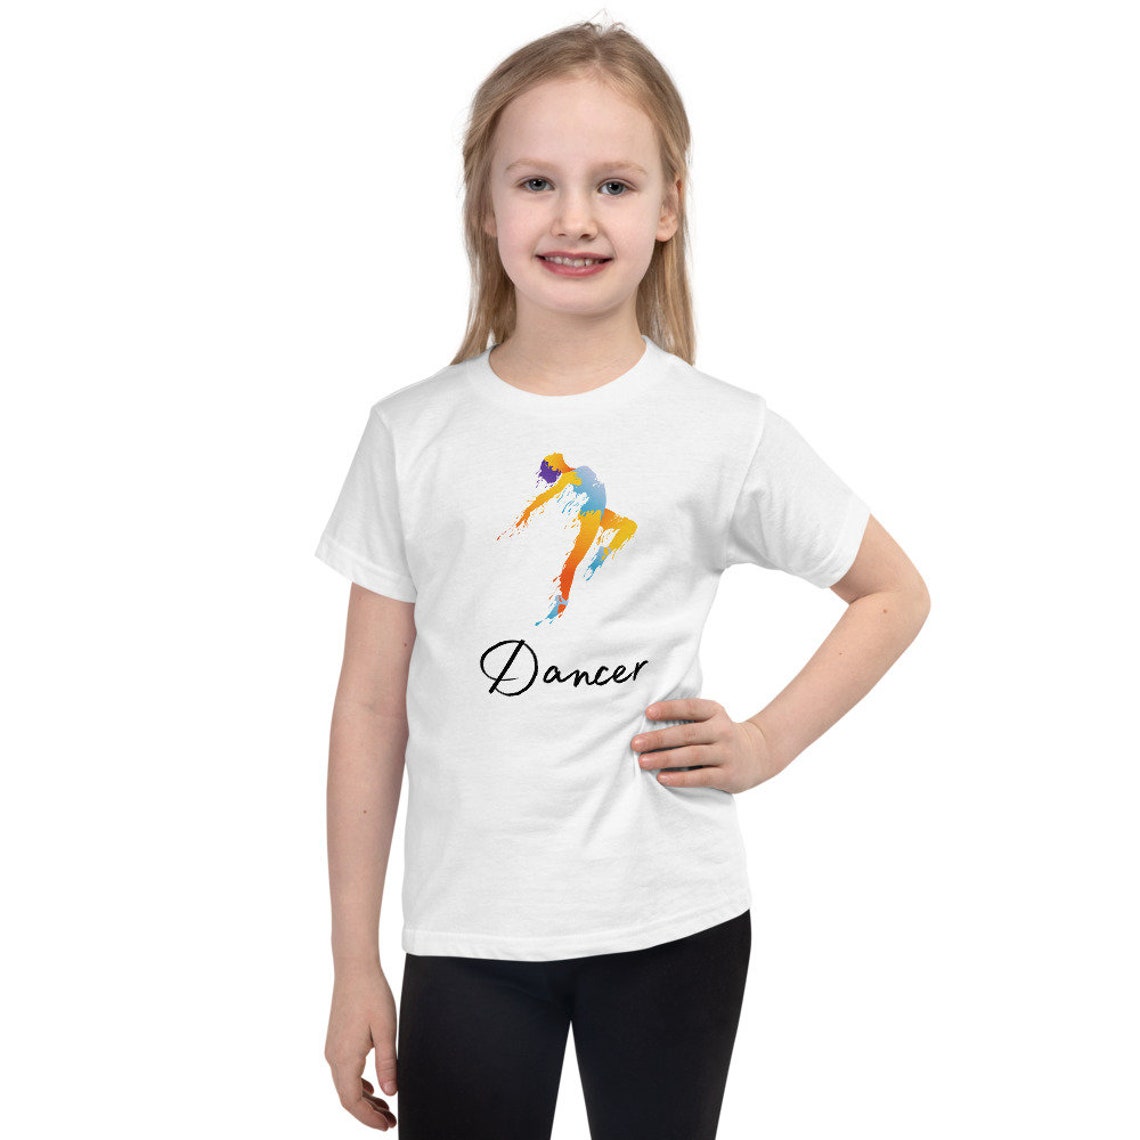 Dance Shirt Kids Dance Tee Shirt Dance T Shirt Dancer | Etsy